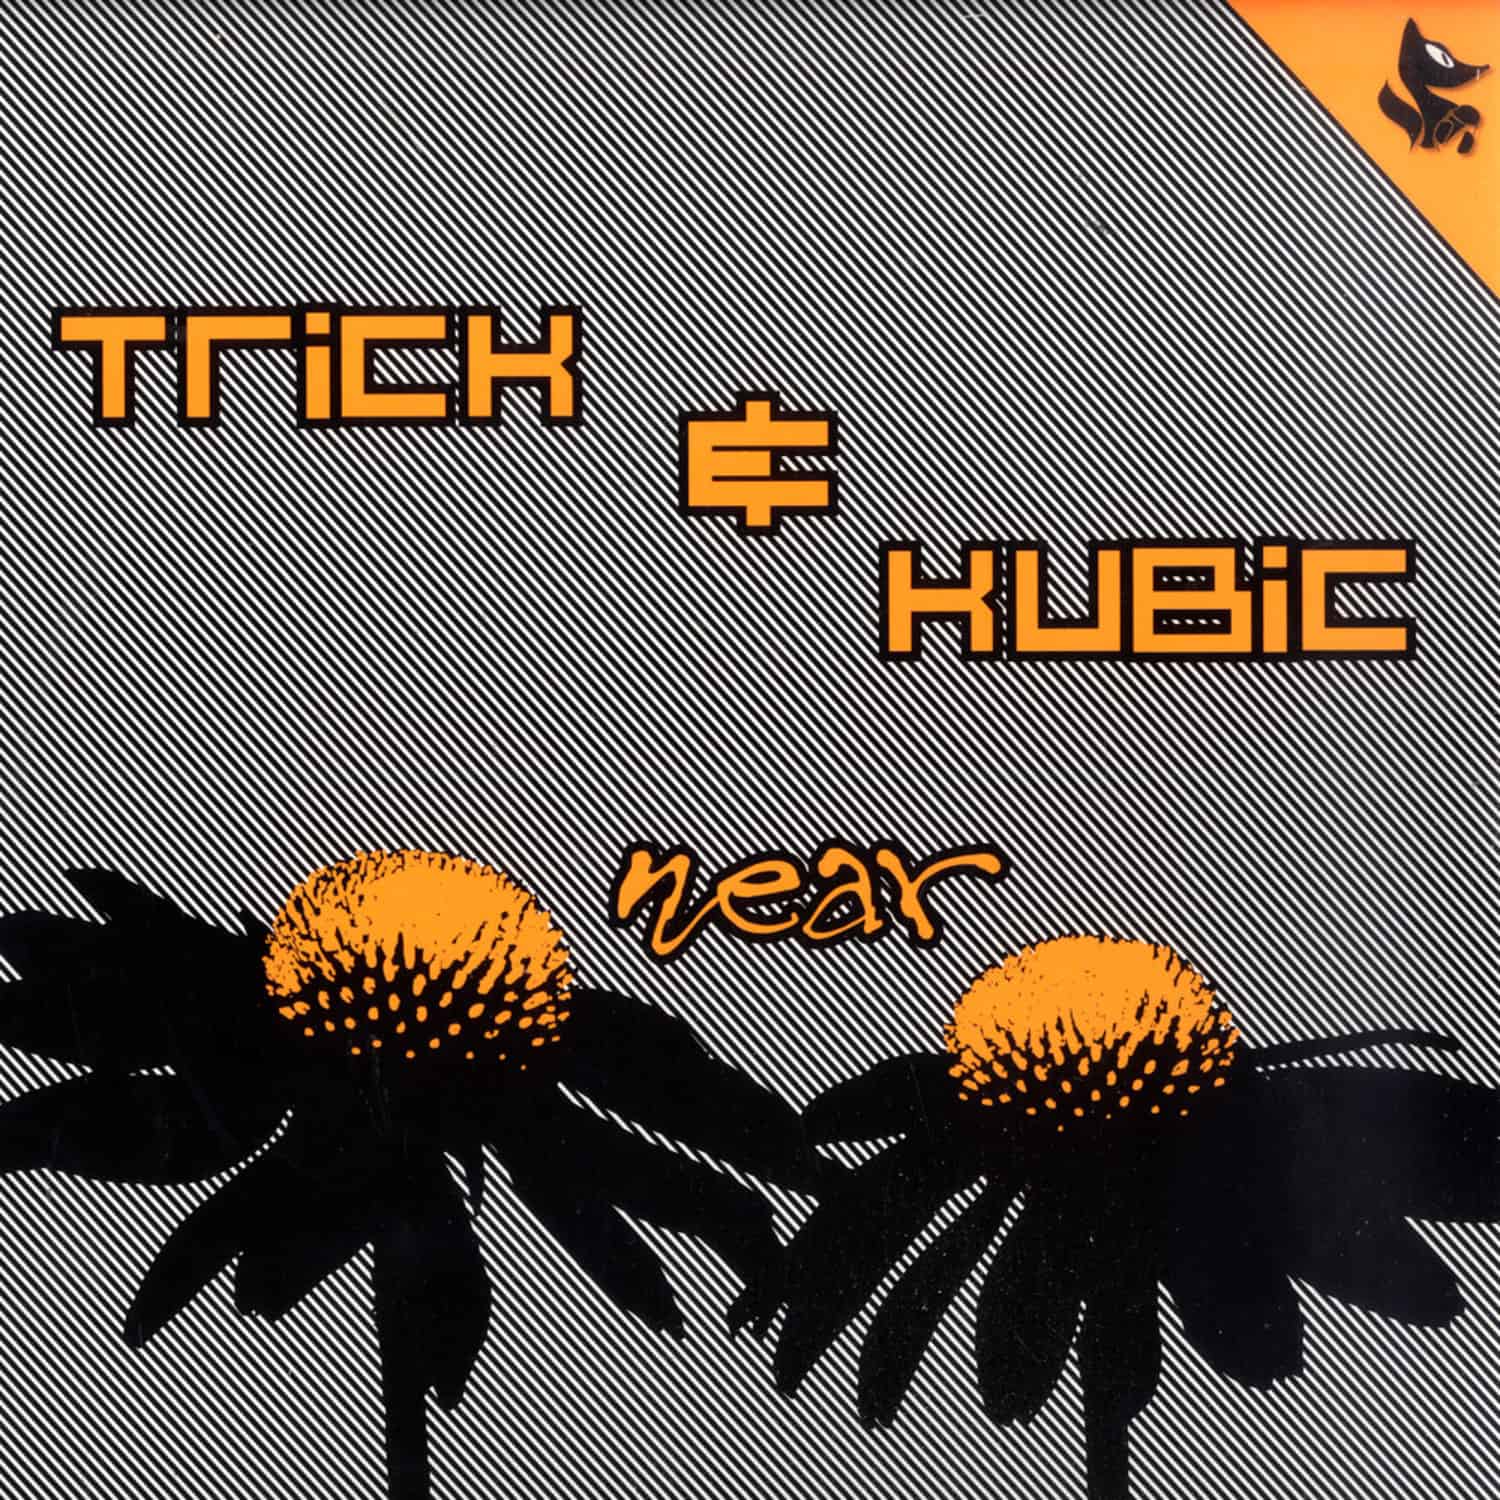 Trick & Kubic - NEAR